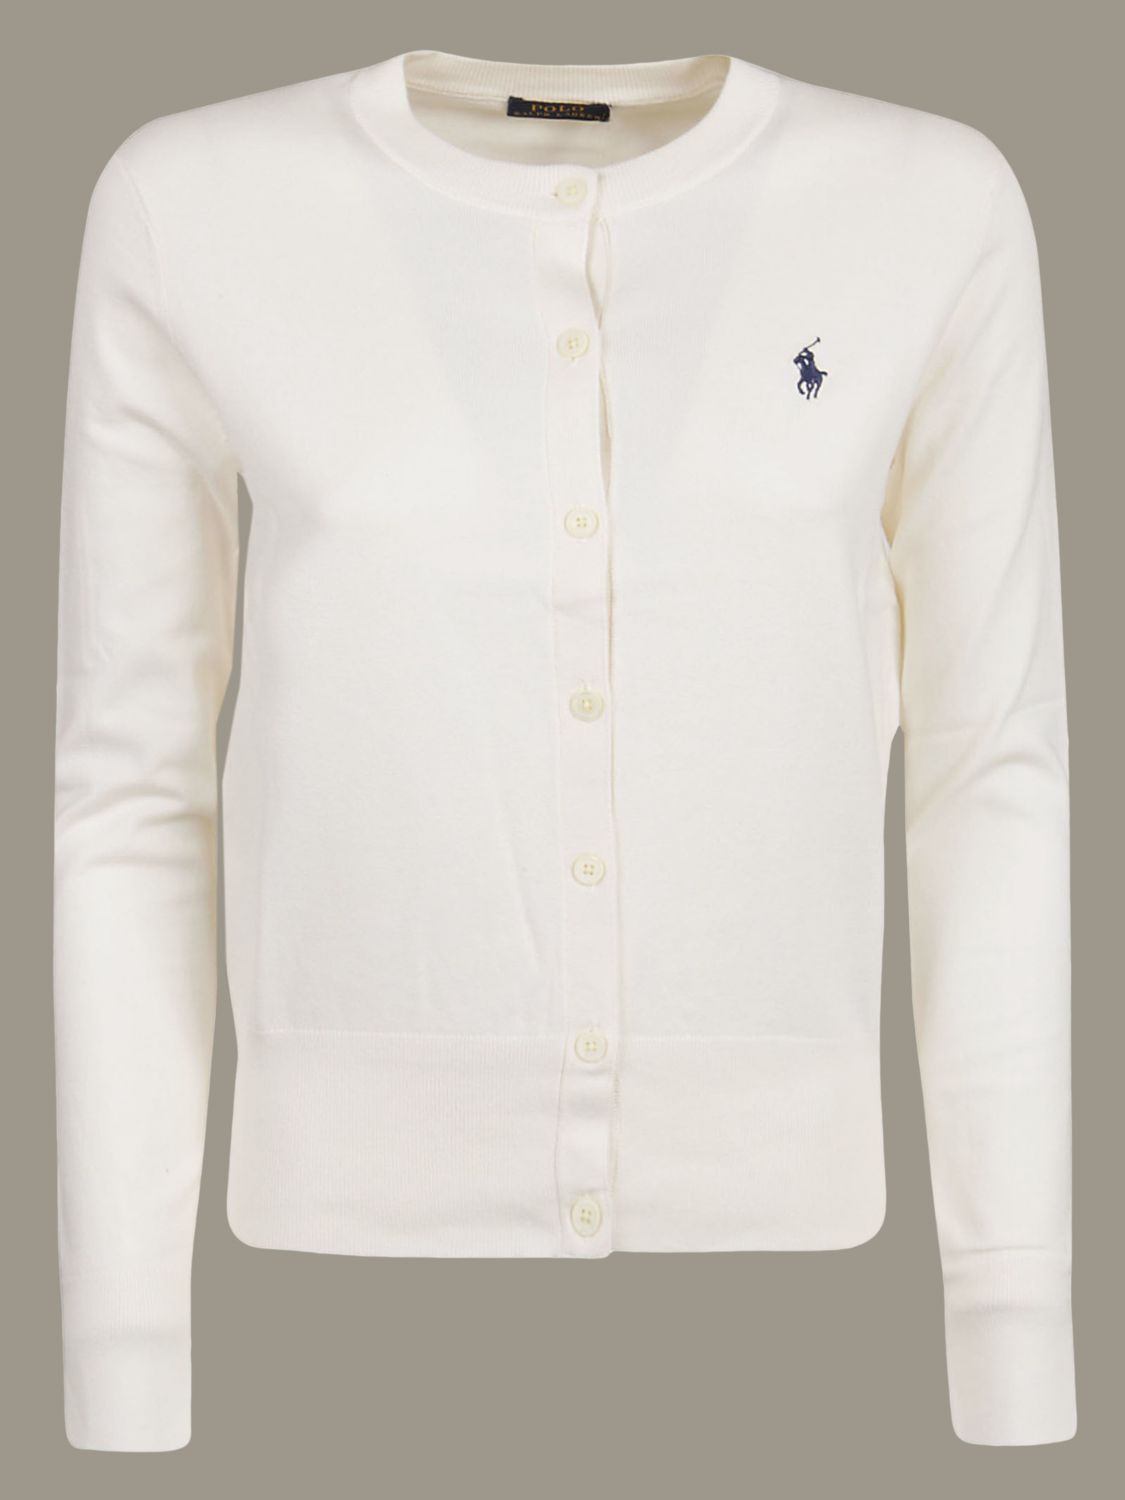 Polo Ralph Lauren Outlet: sweater for woman - Cream | Polo Ralph Lauren ...